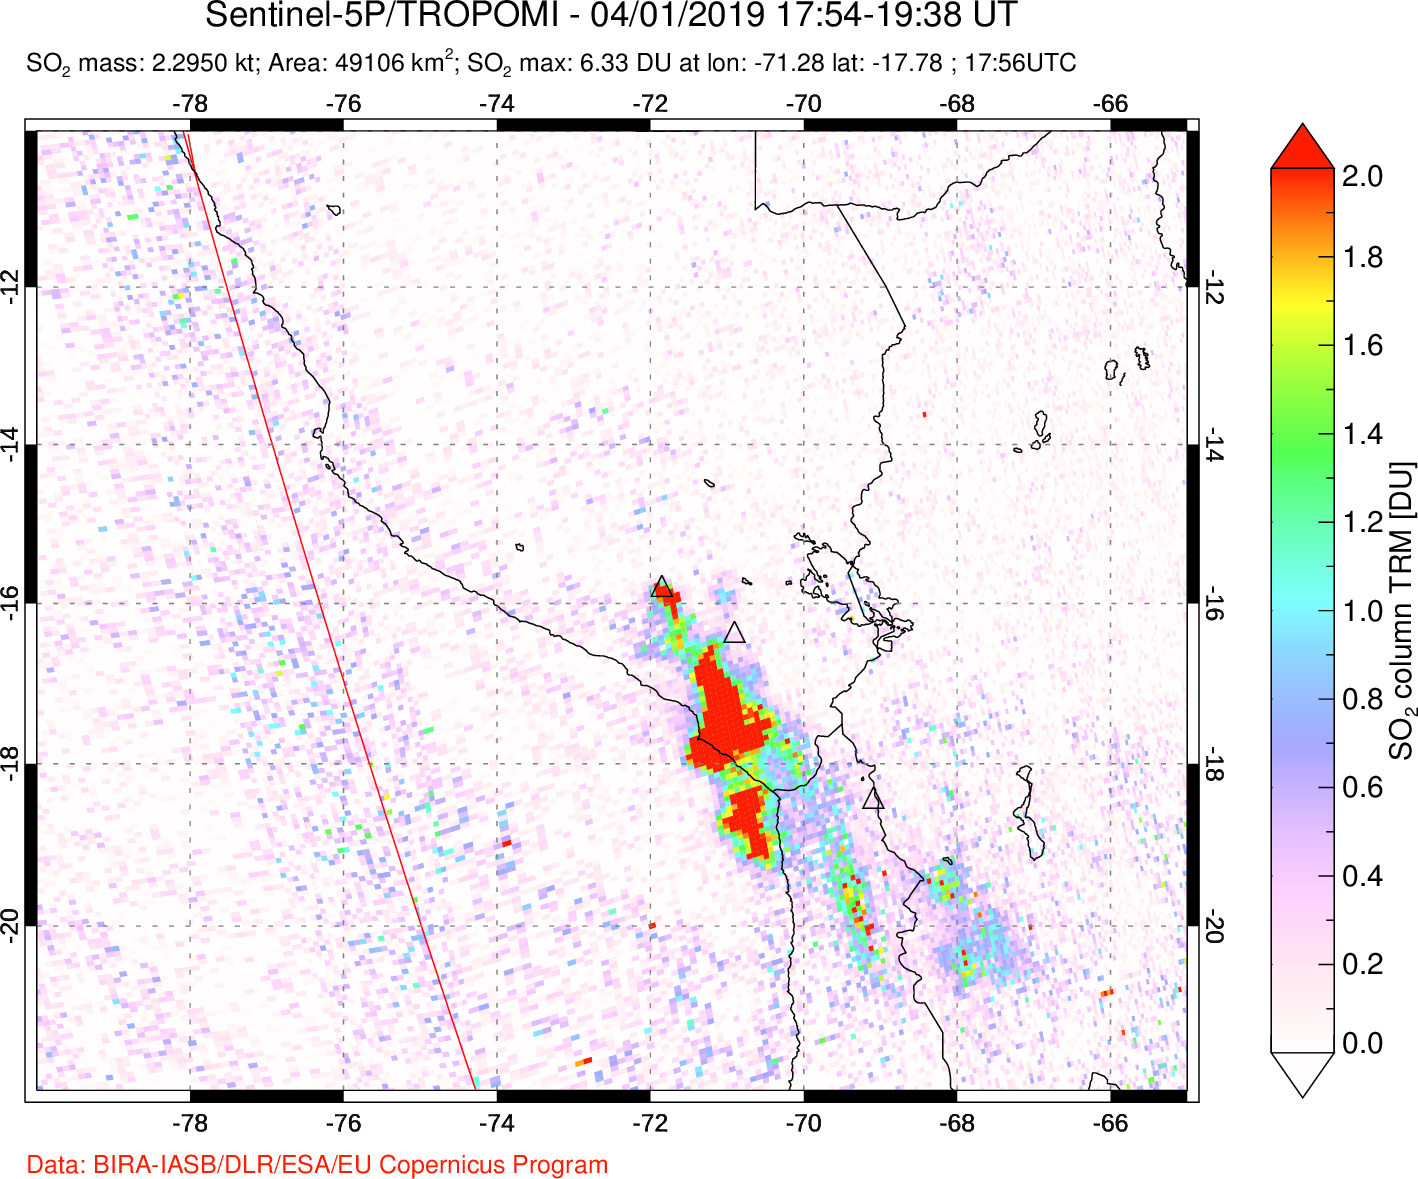 A sulfur dioxide image over Peru on Apr 01, 2019.